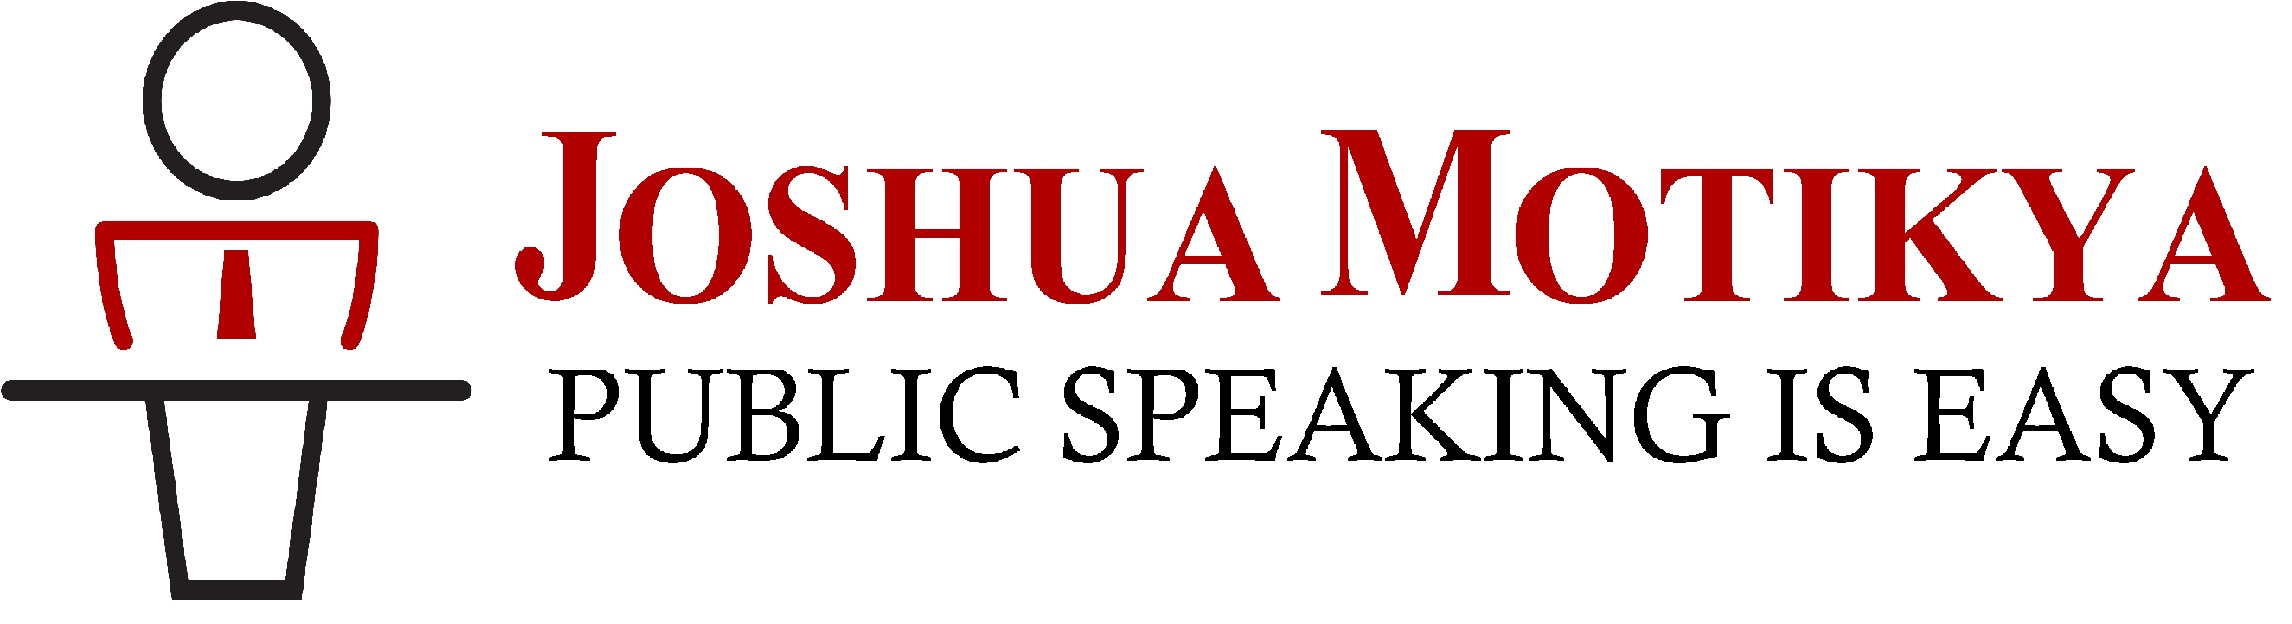 Joshua Motikya - Public Speaking Training